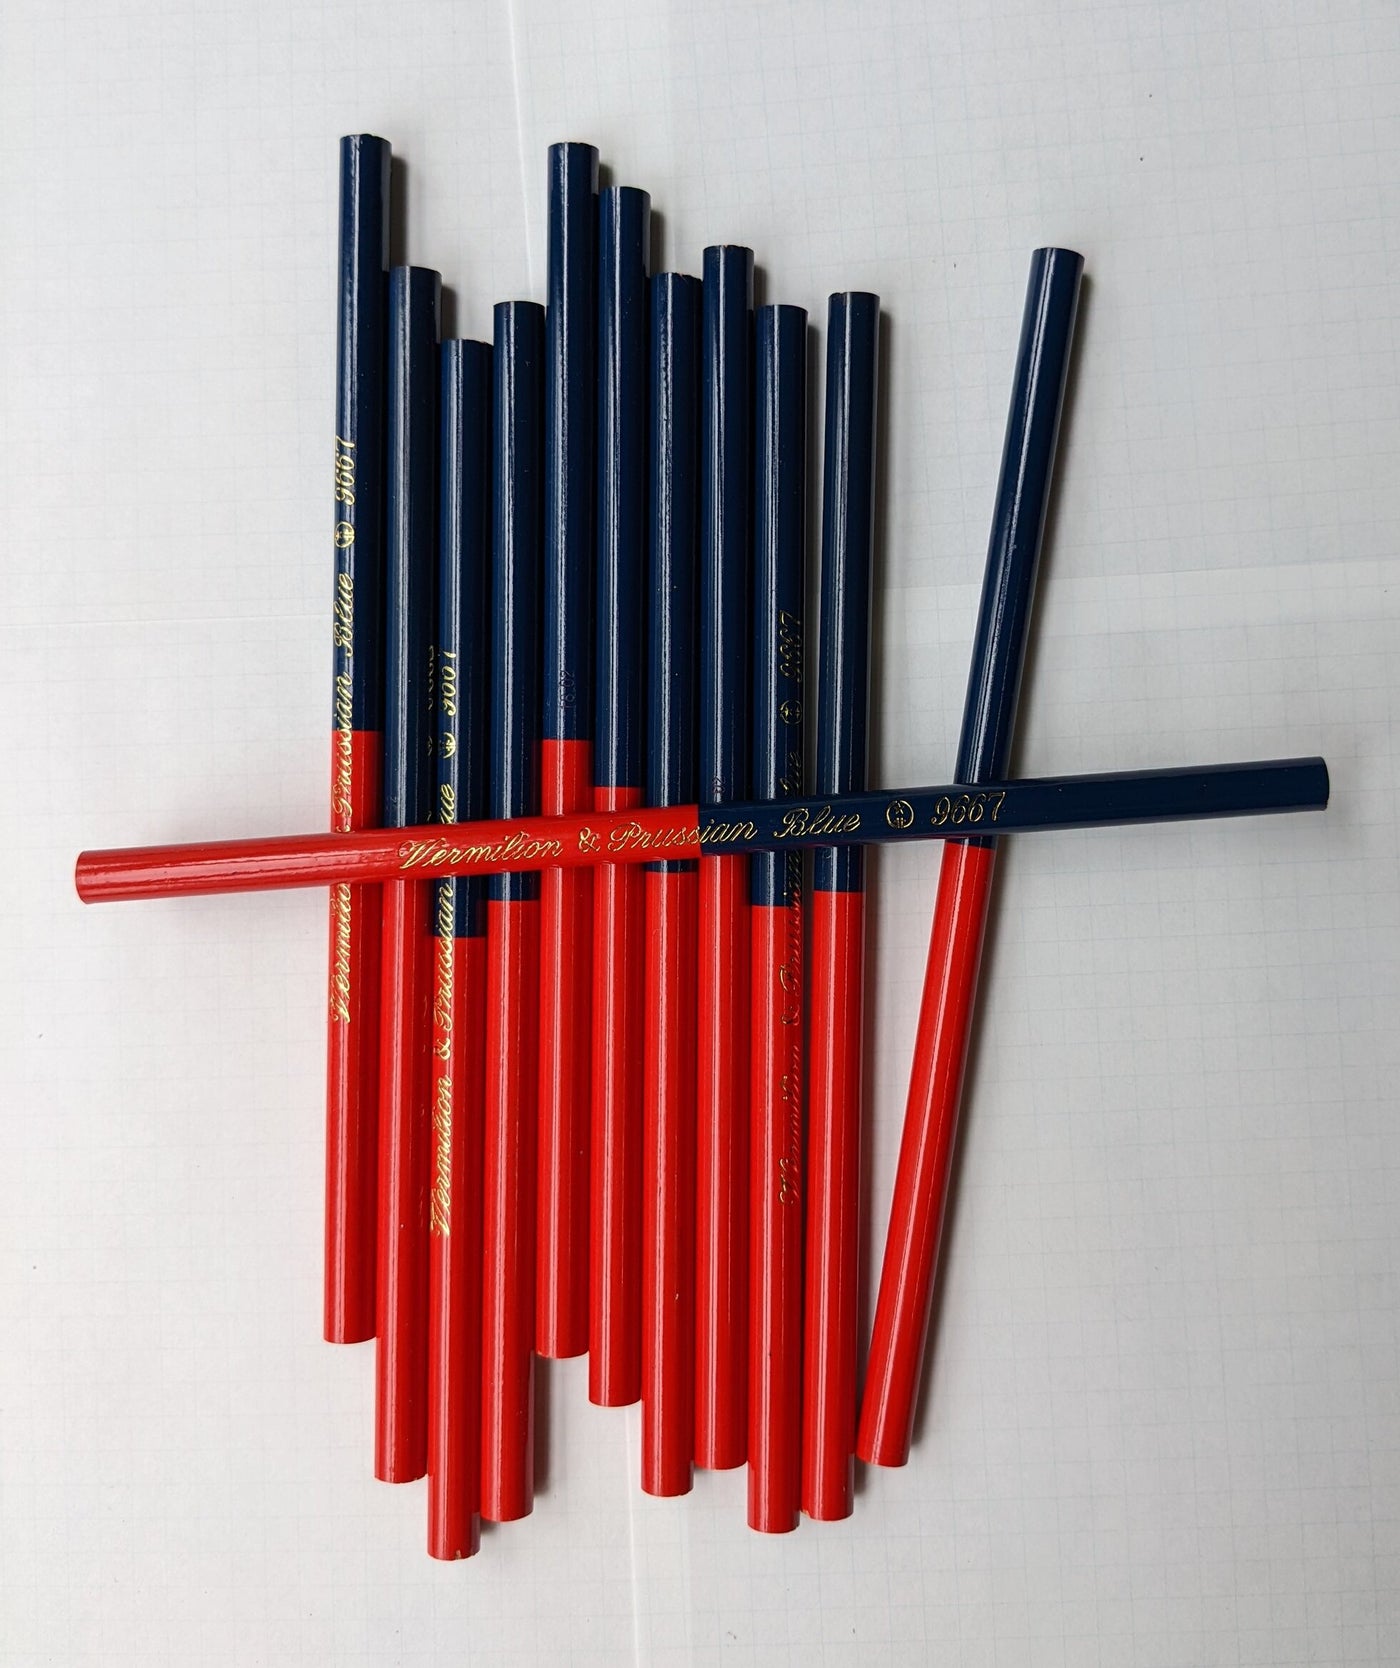 Kita-Boshi Vermillion & Prussian Blue Pencils